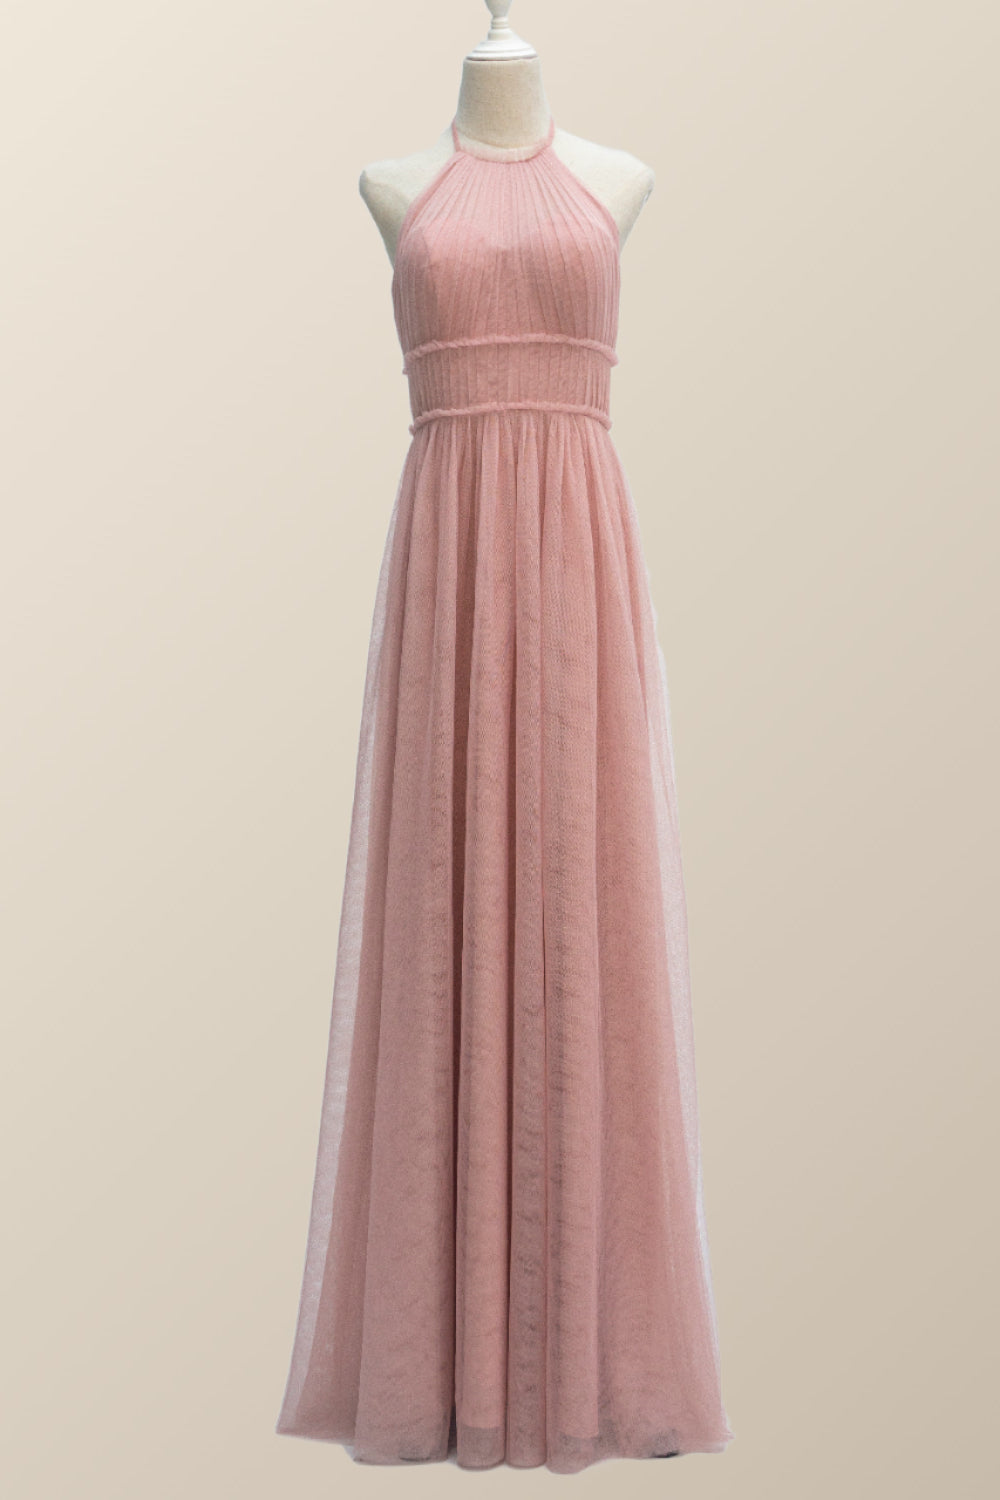 Halter Blush Pink Tulle Long Bridesmaid Dress